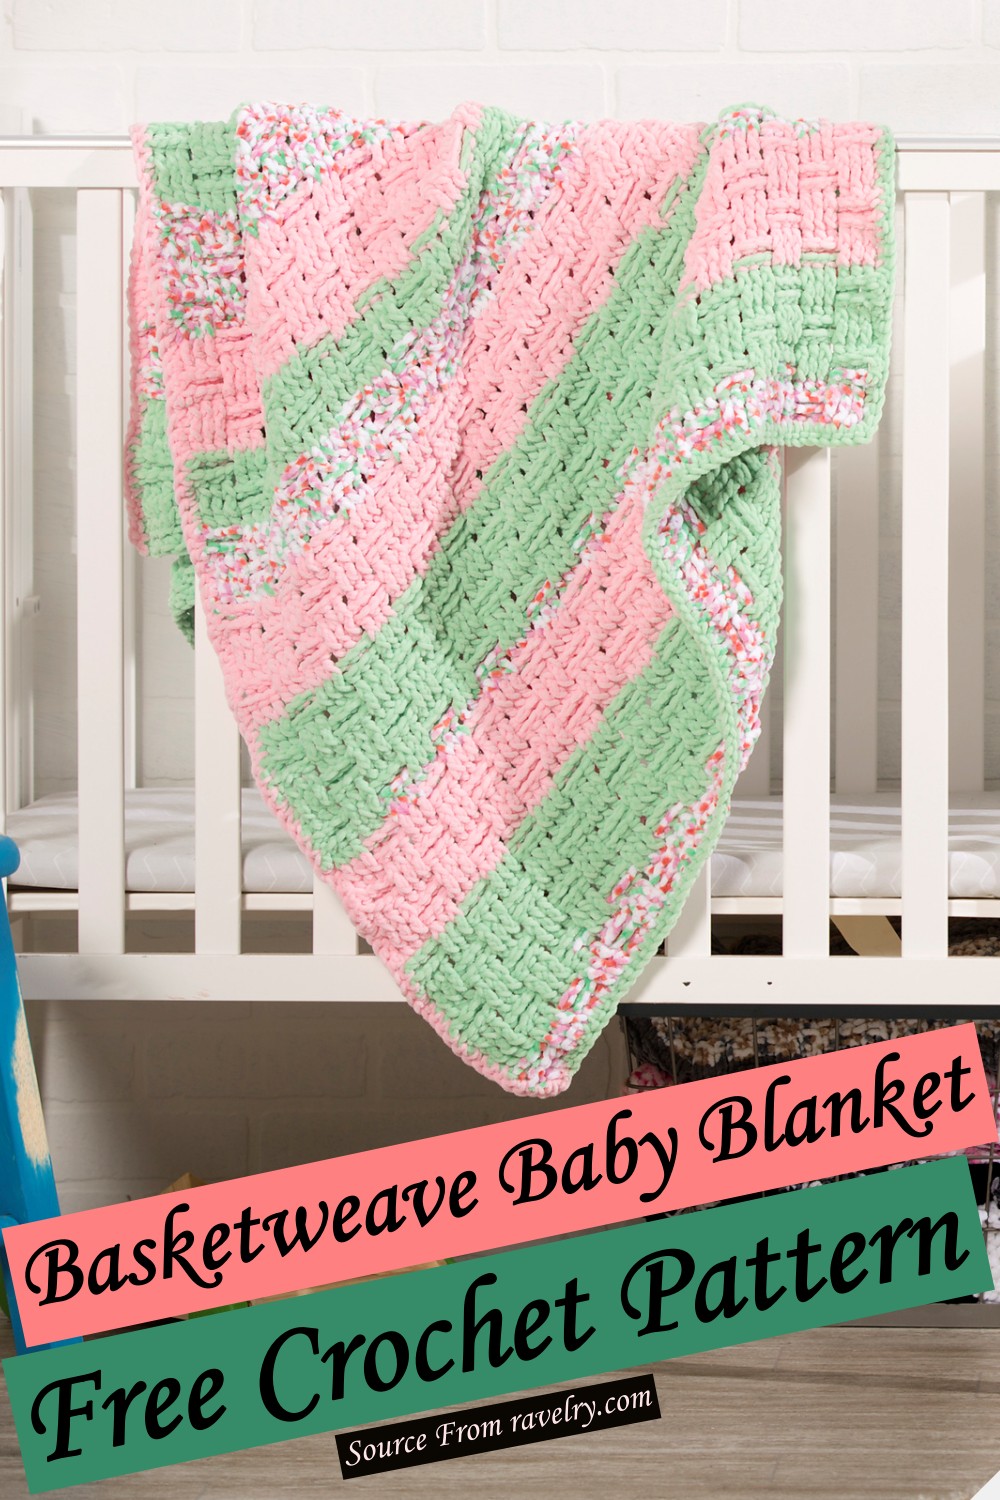 Free Crochet Basketweave Baby Blanket Pattern